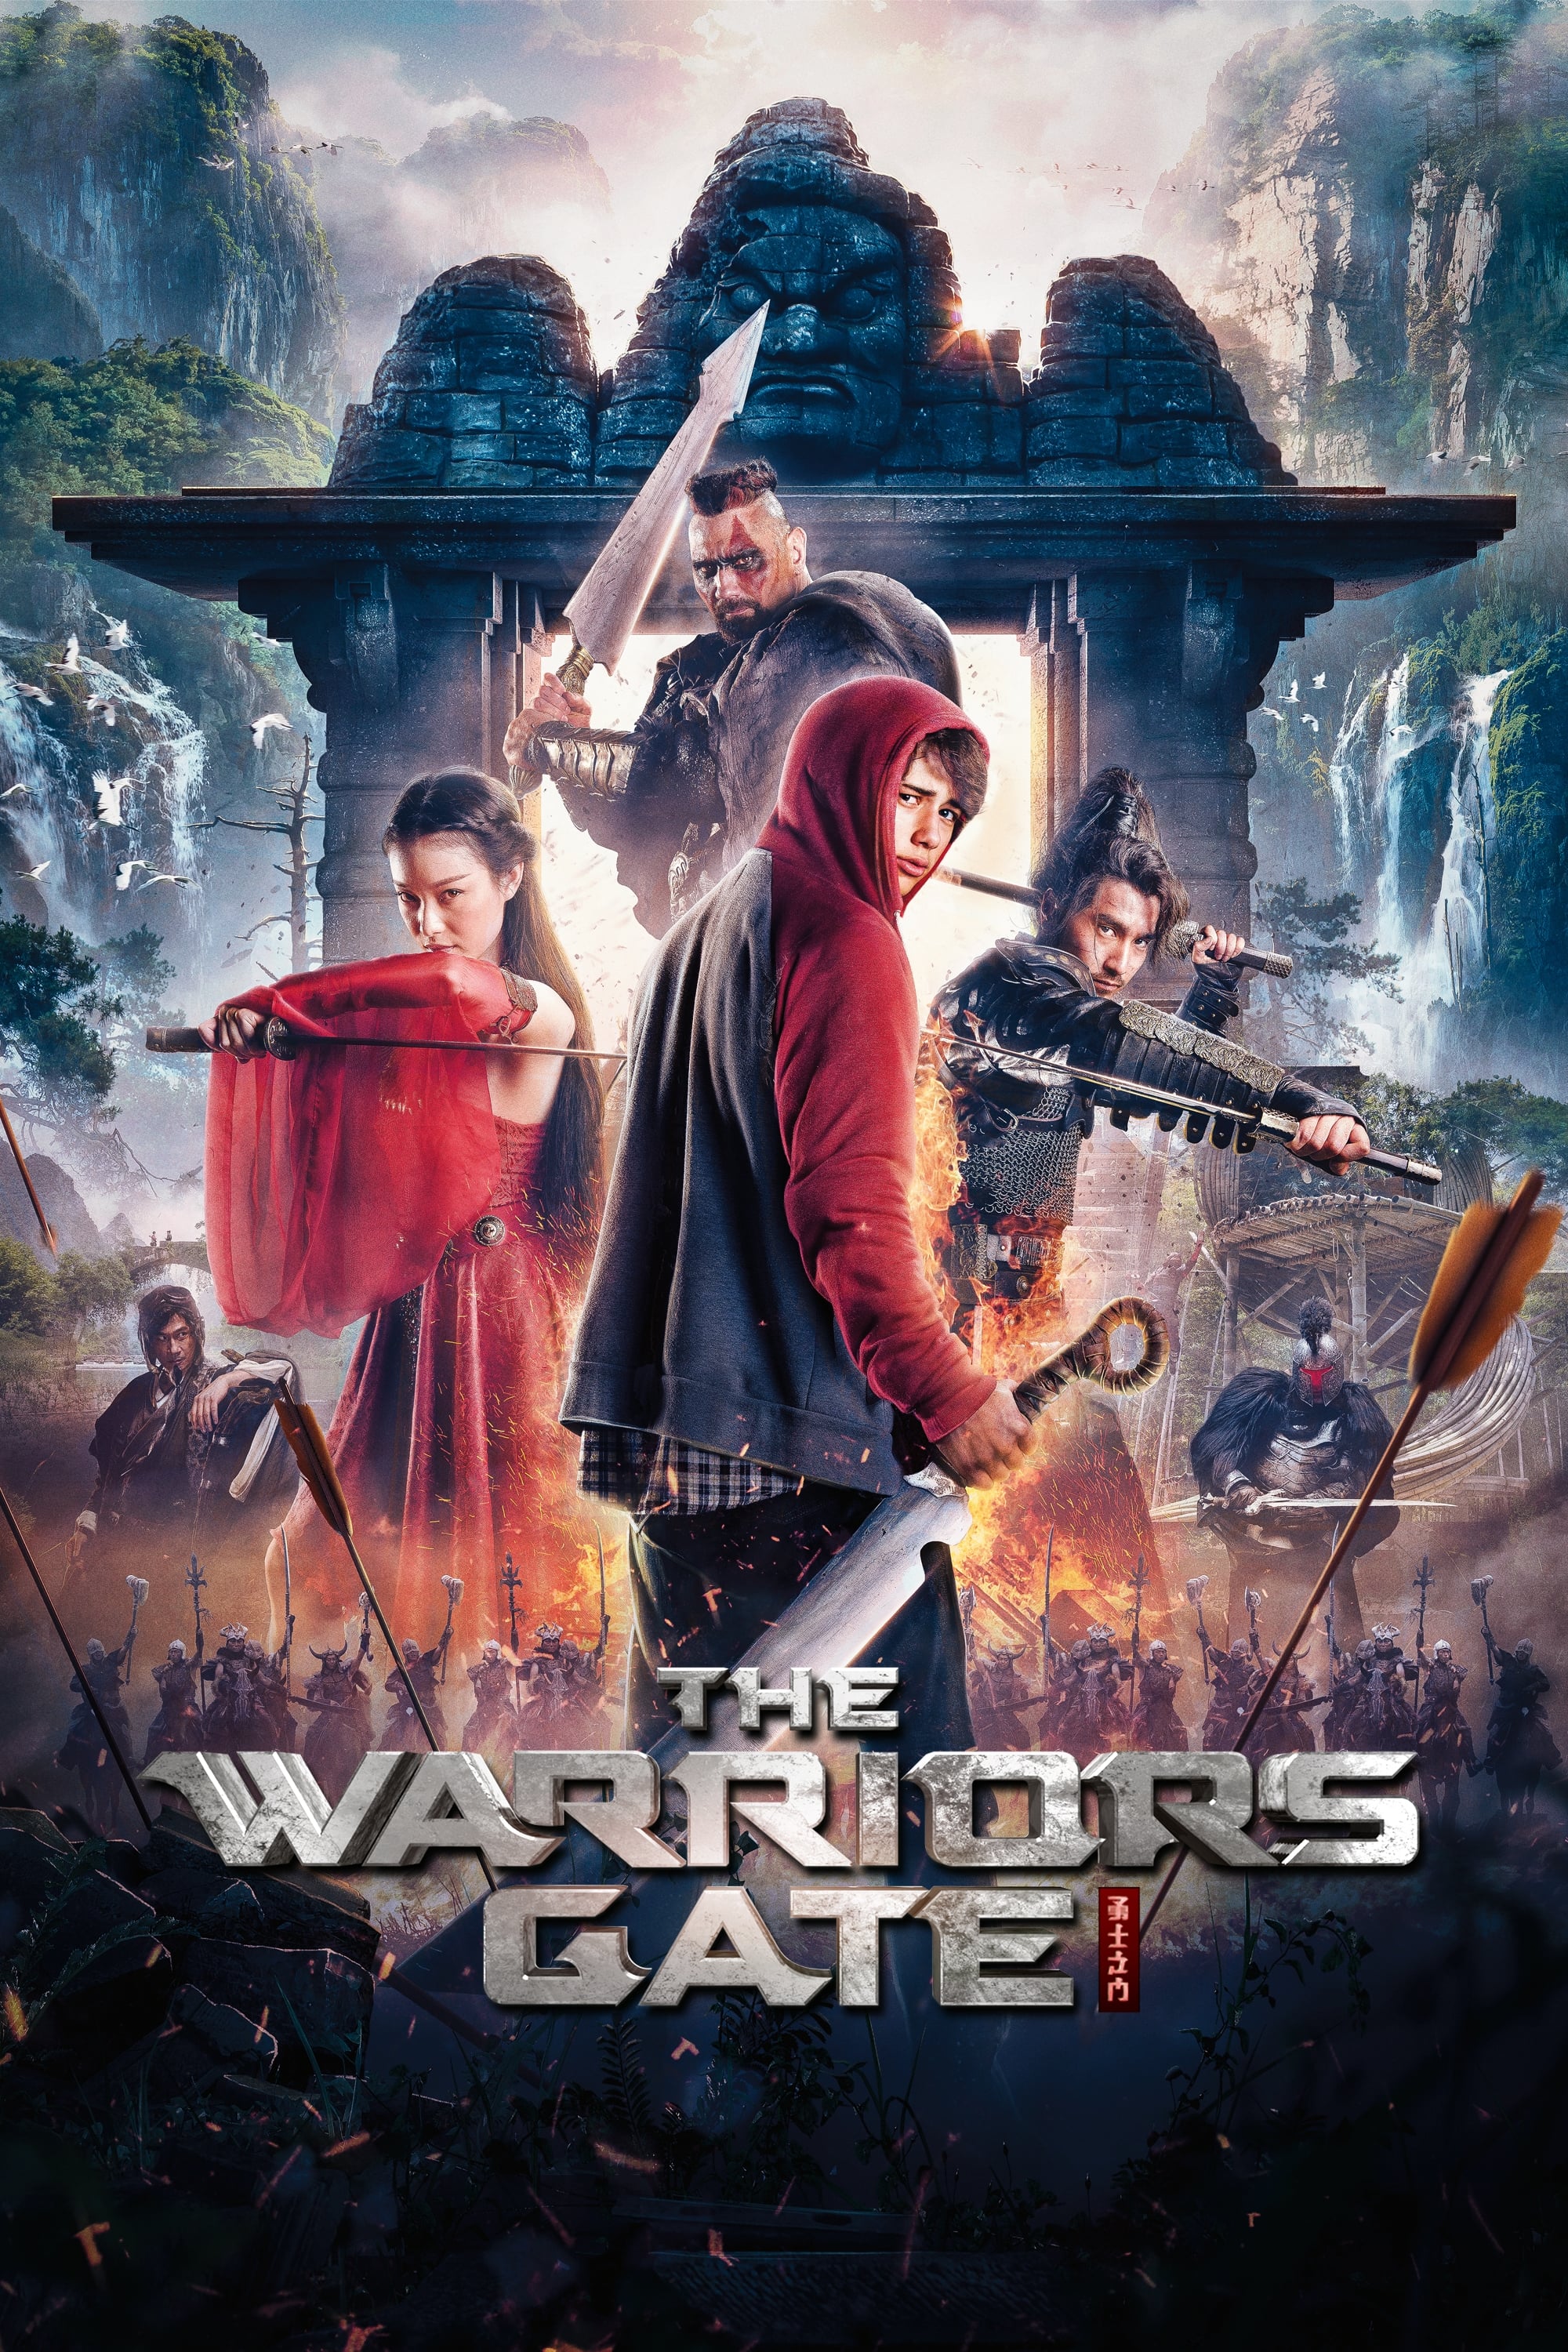 The Warriors Gate film